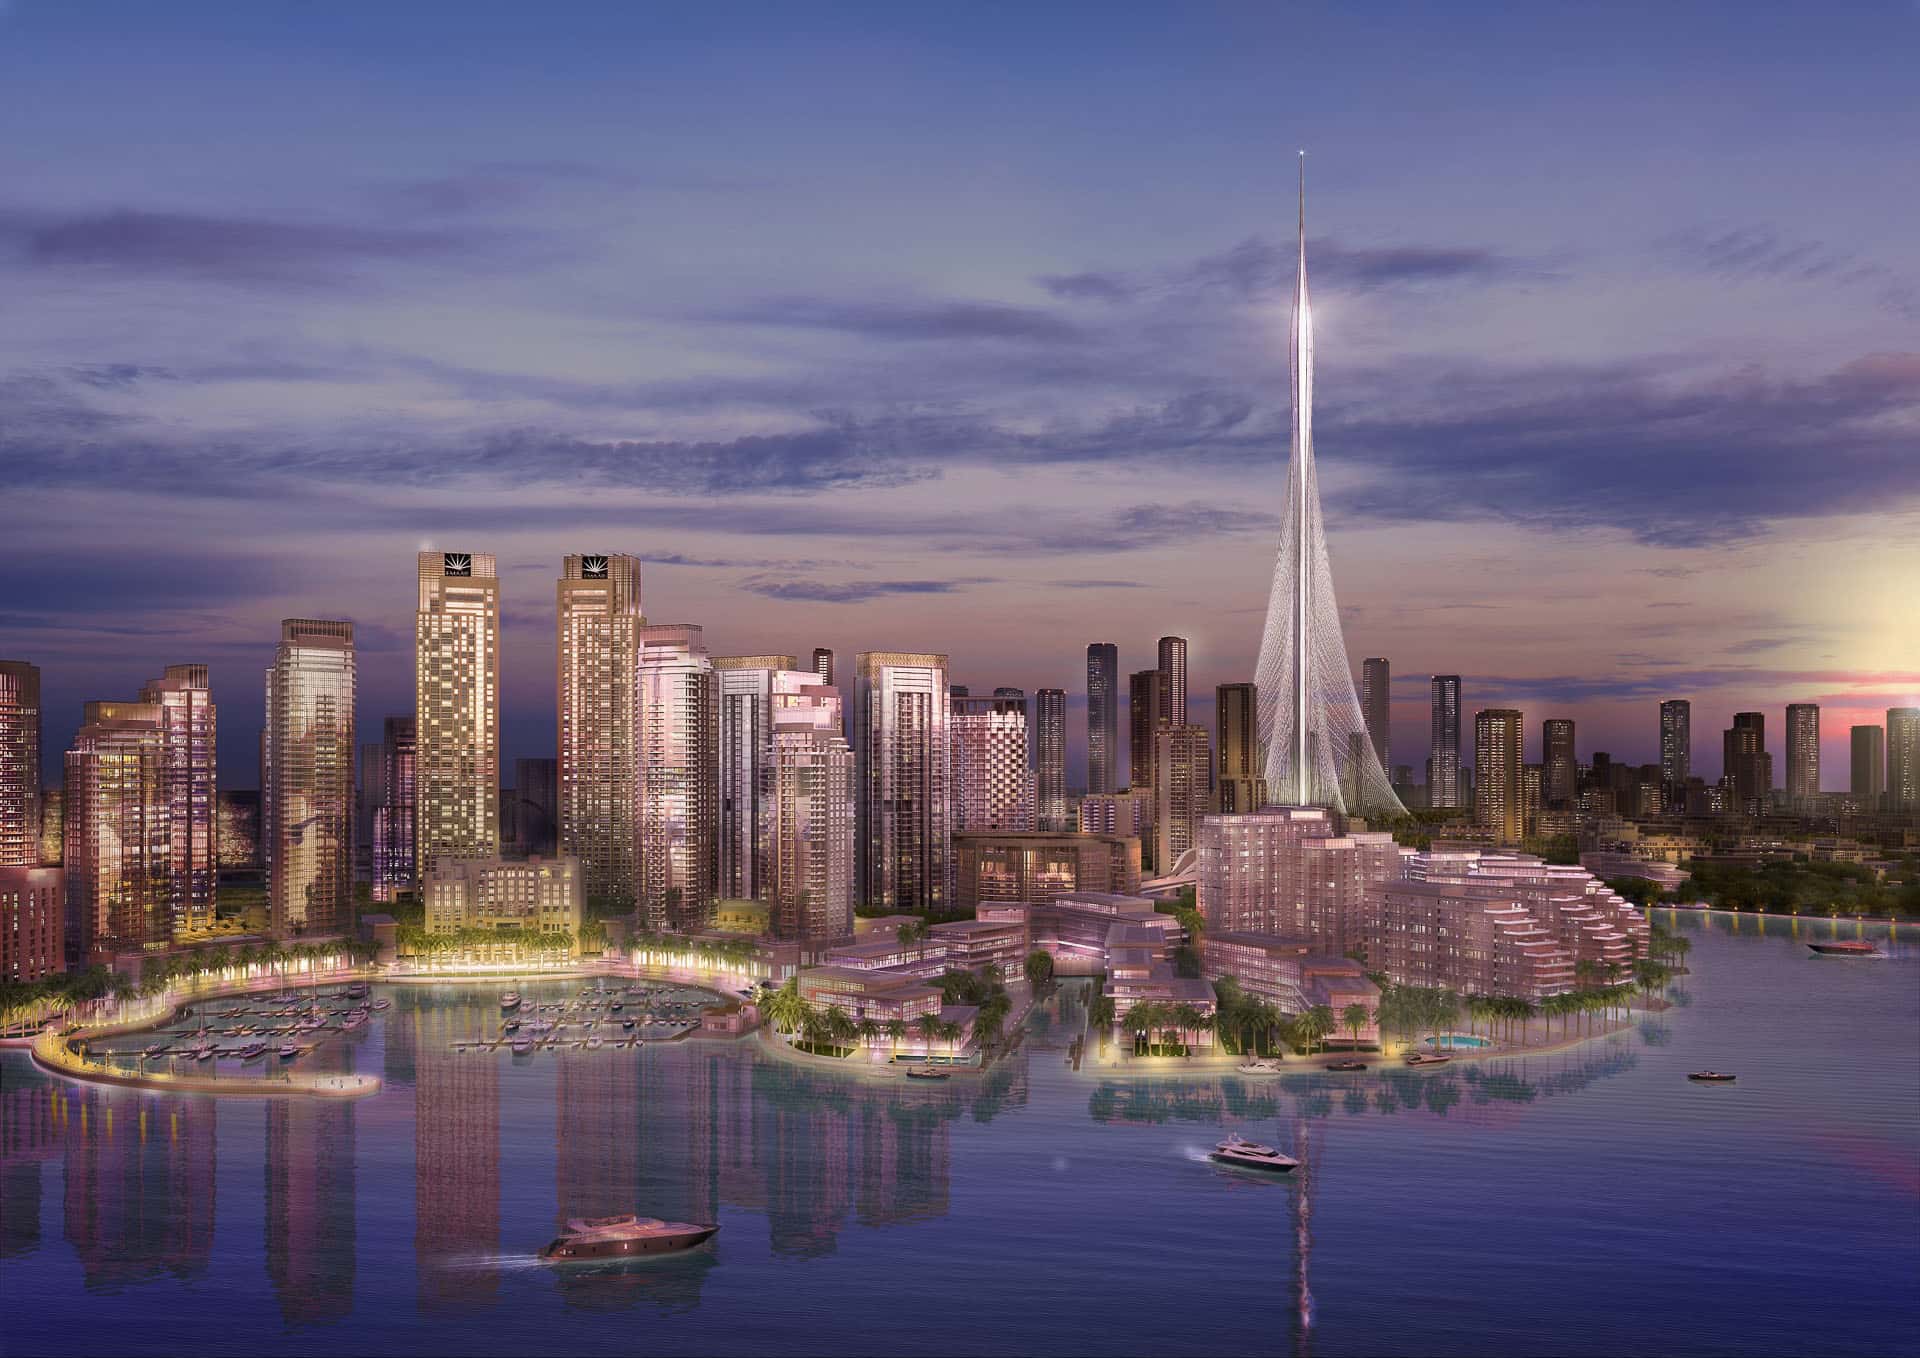 Dubai Creek Tower - Under Construction